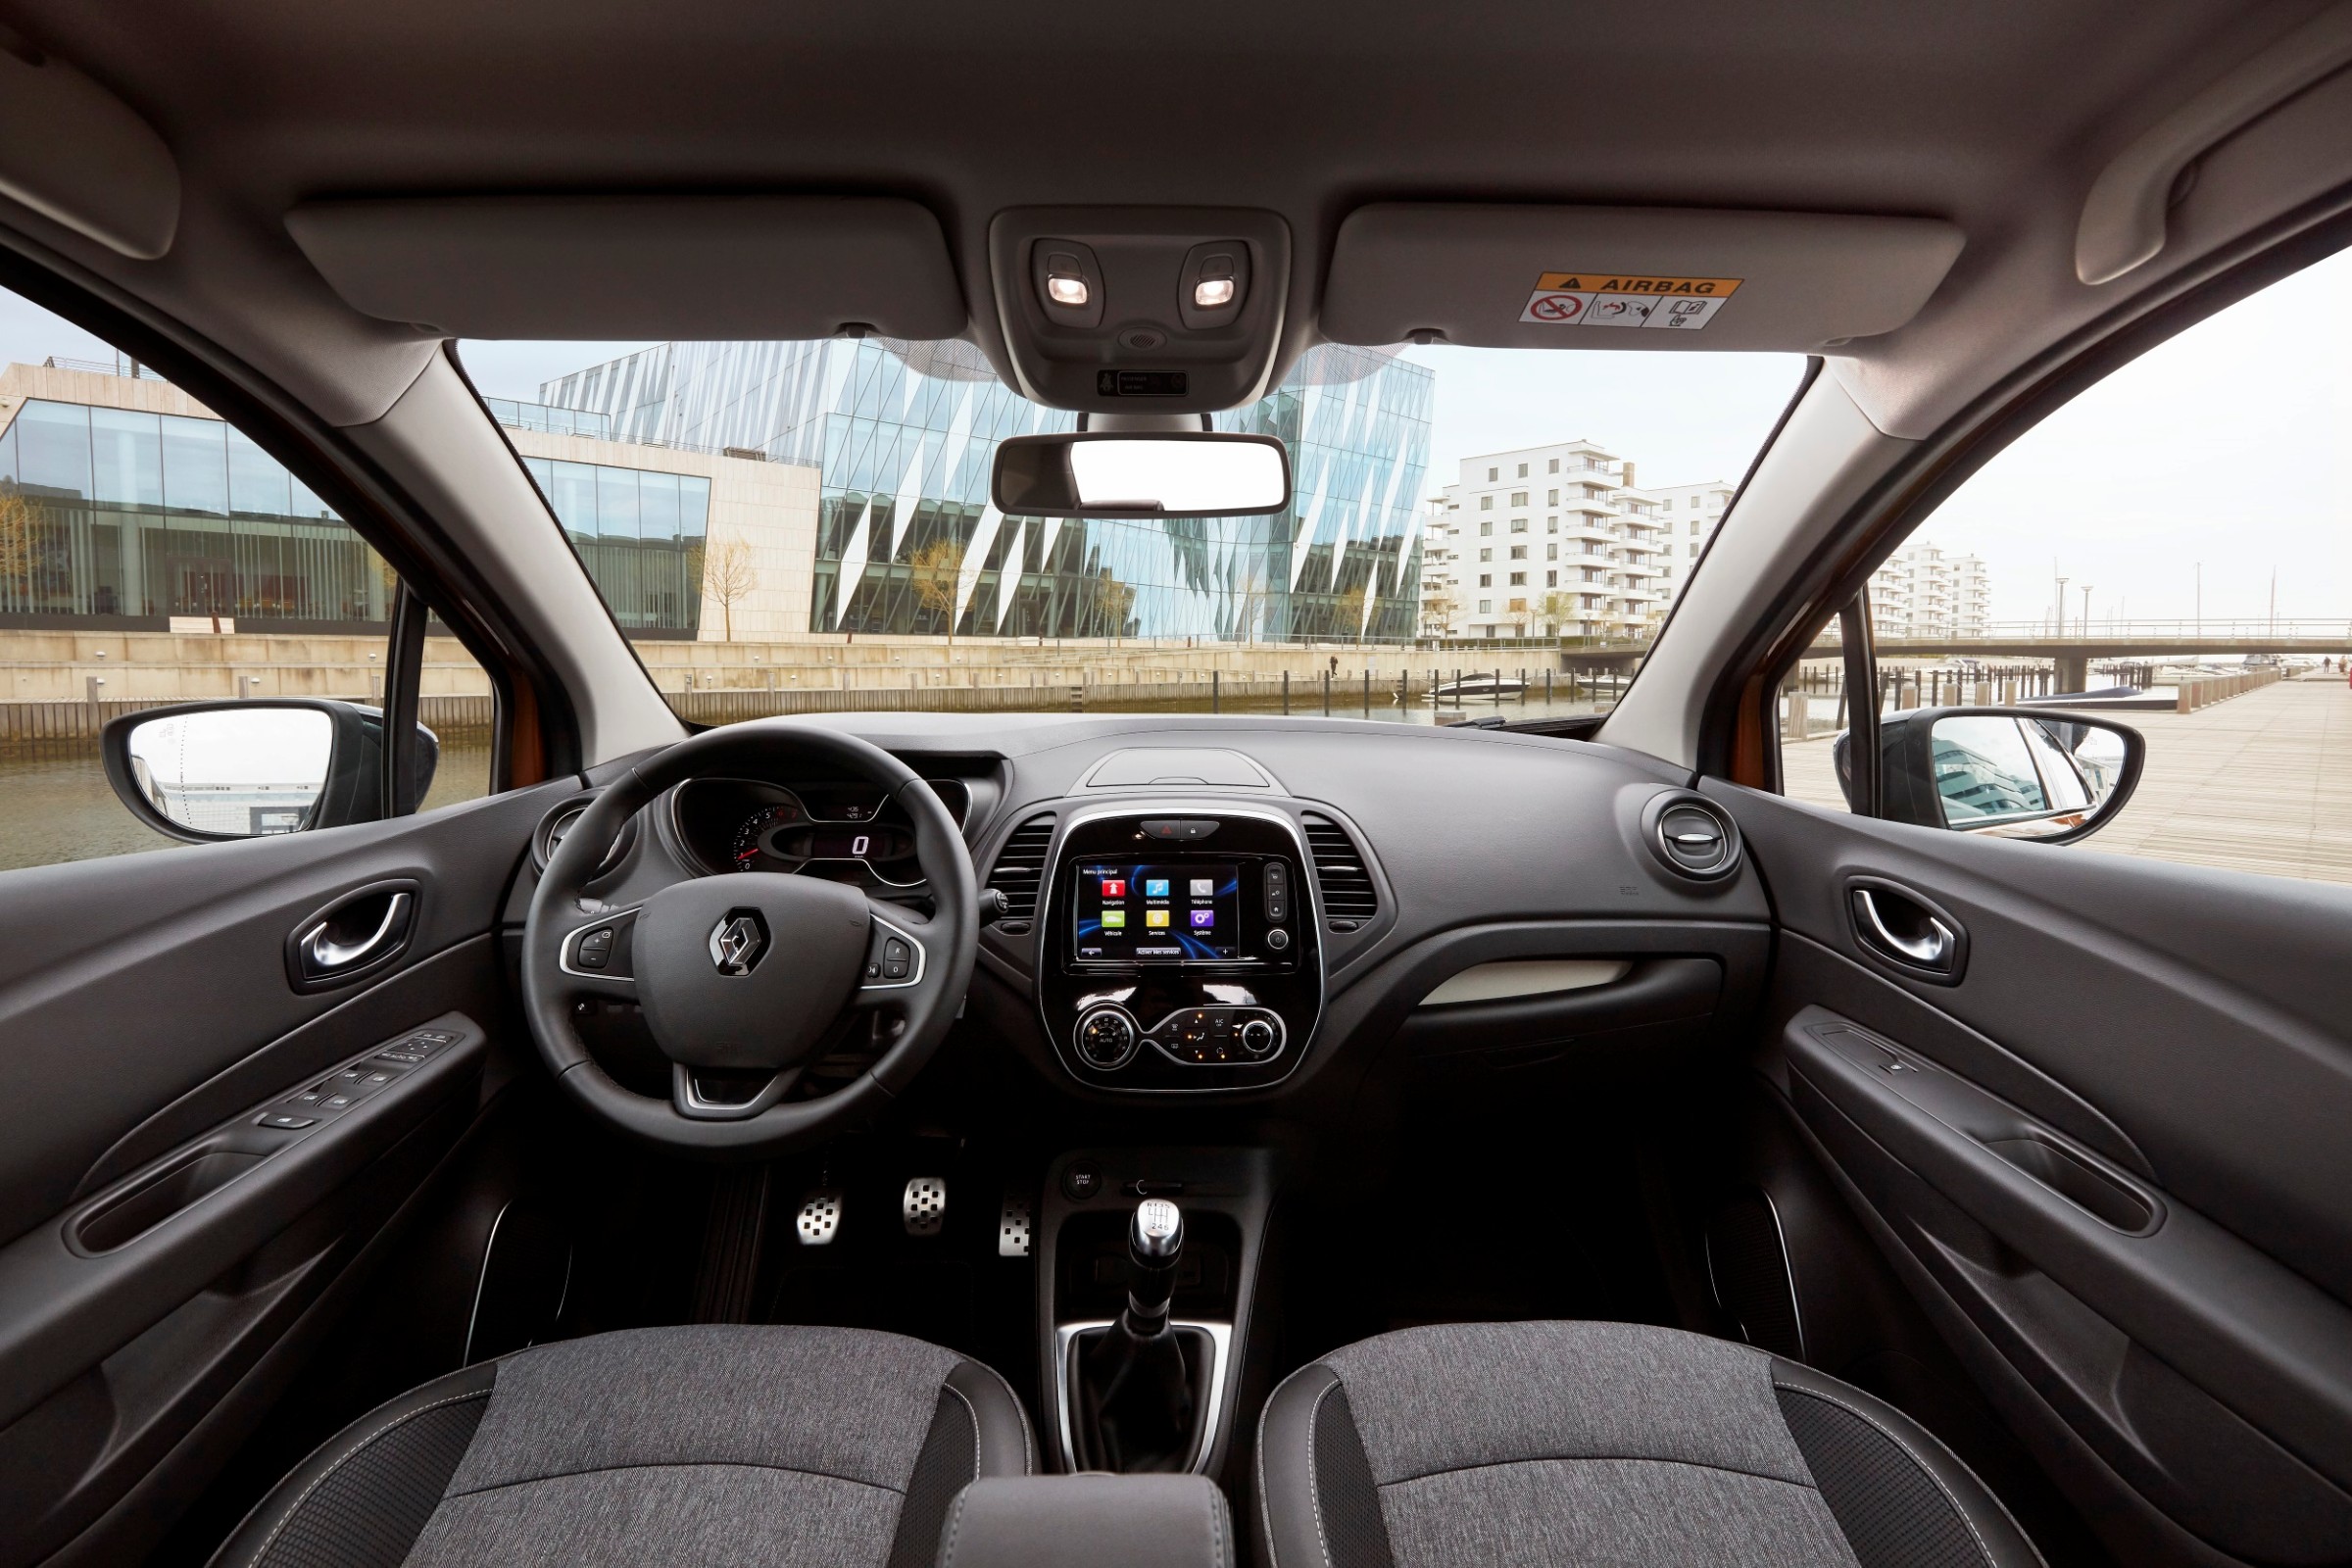 Renault Captur: Außen SUV, innen Van